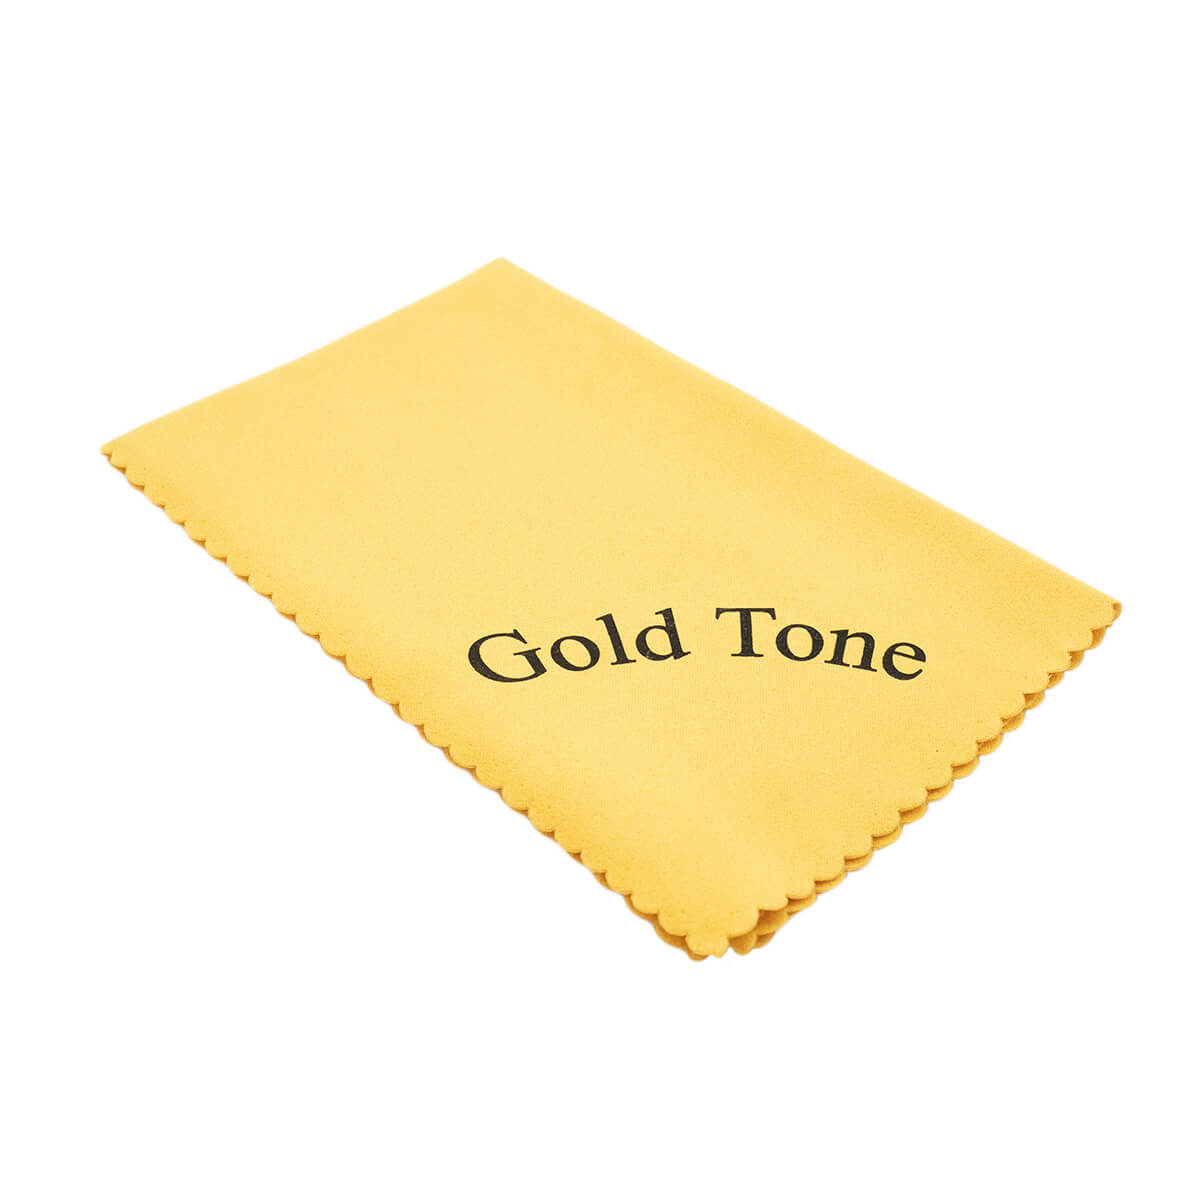 Gold Tone Pc: Polishing Cloth with GT Logo